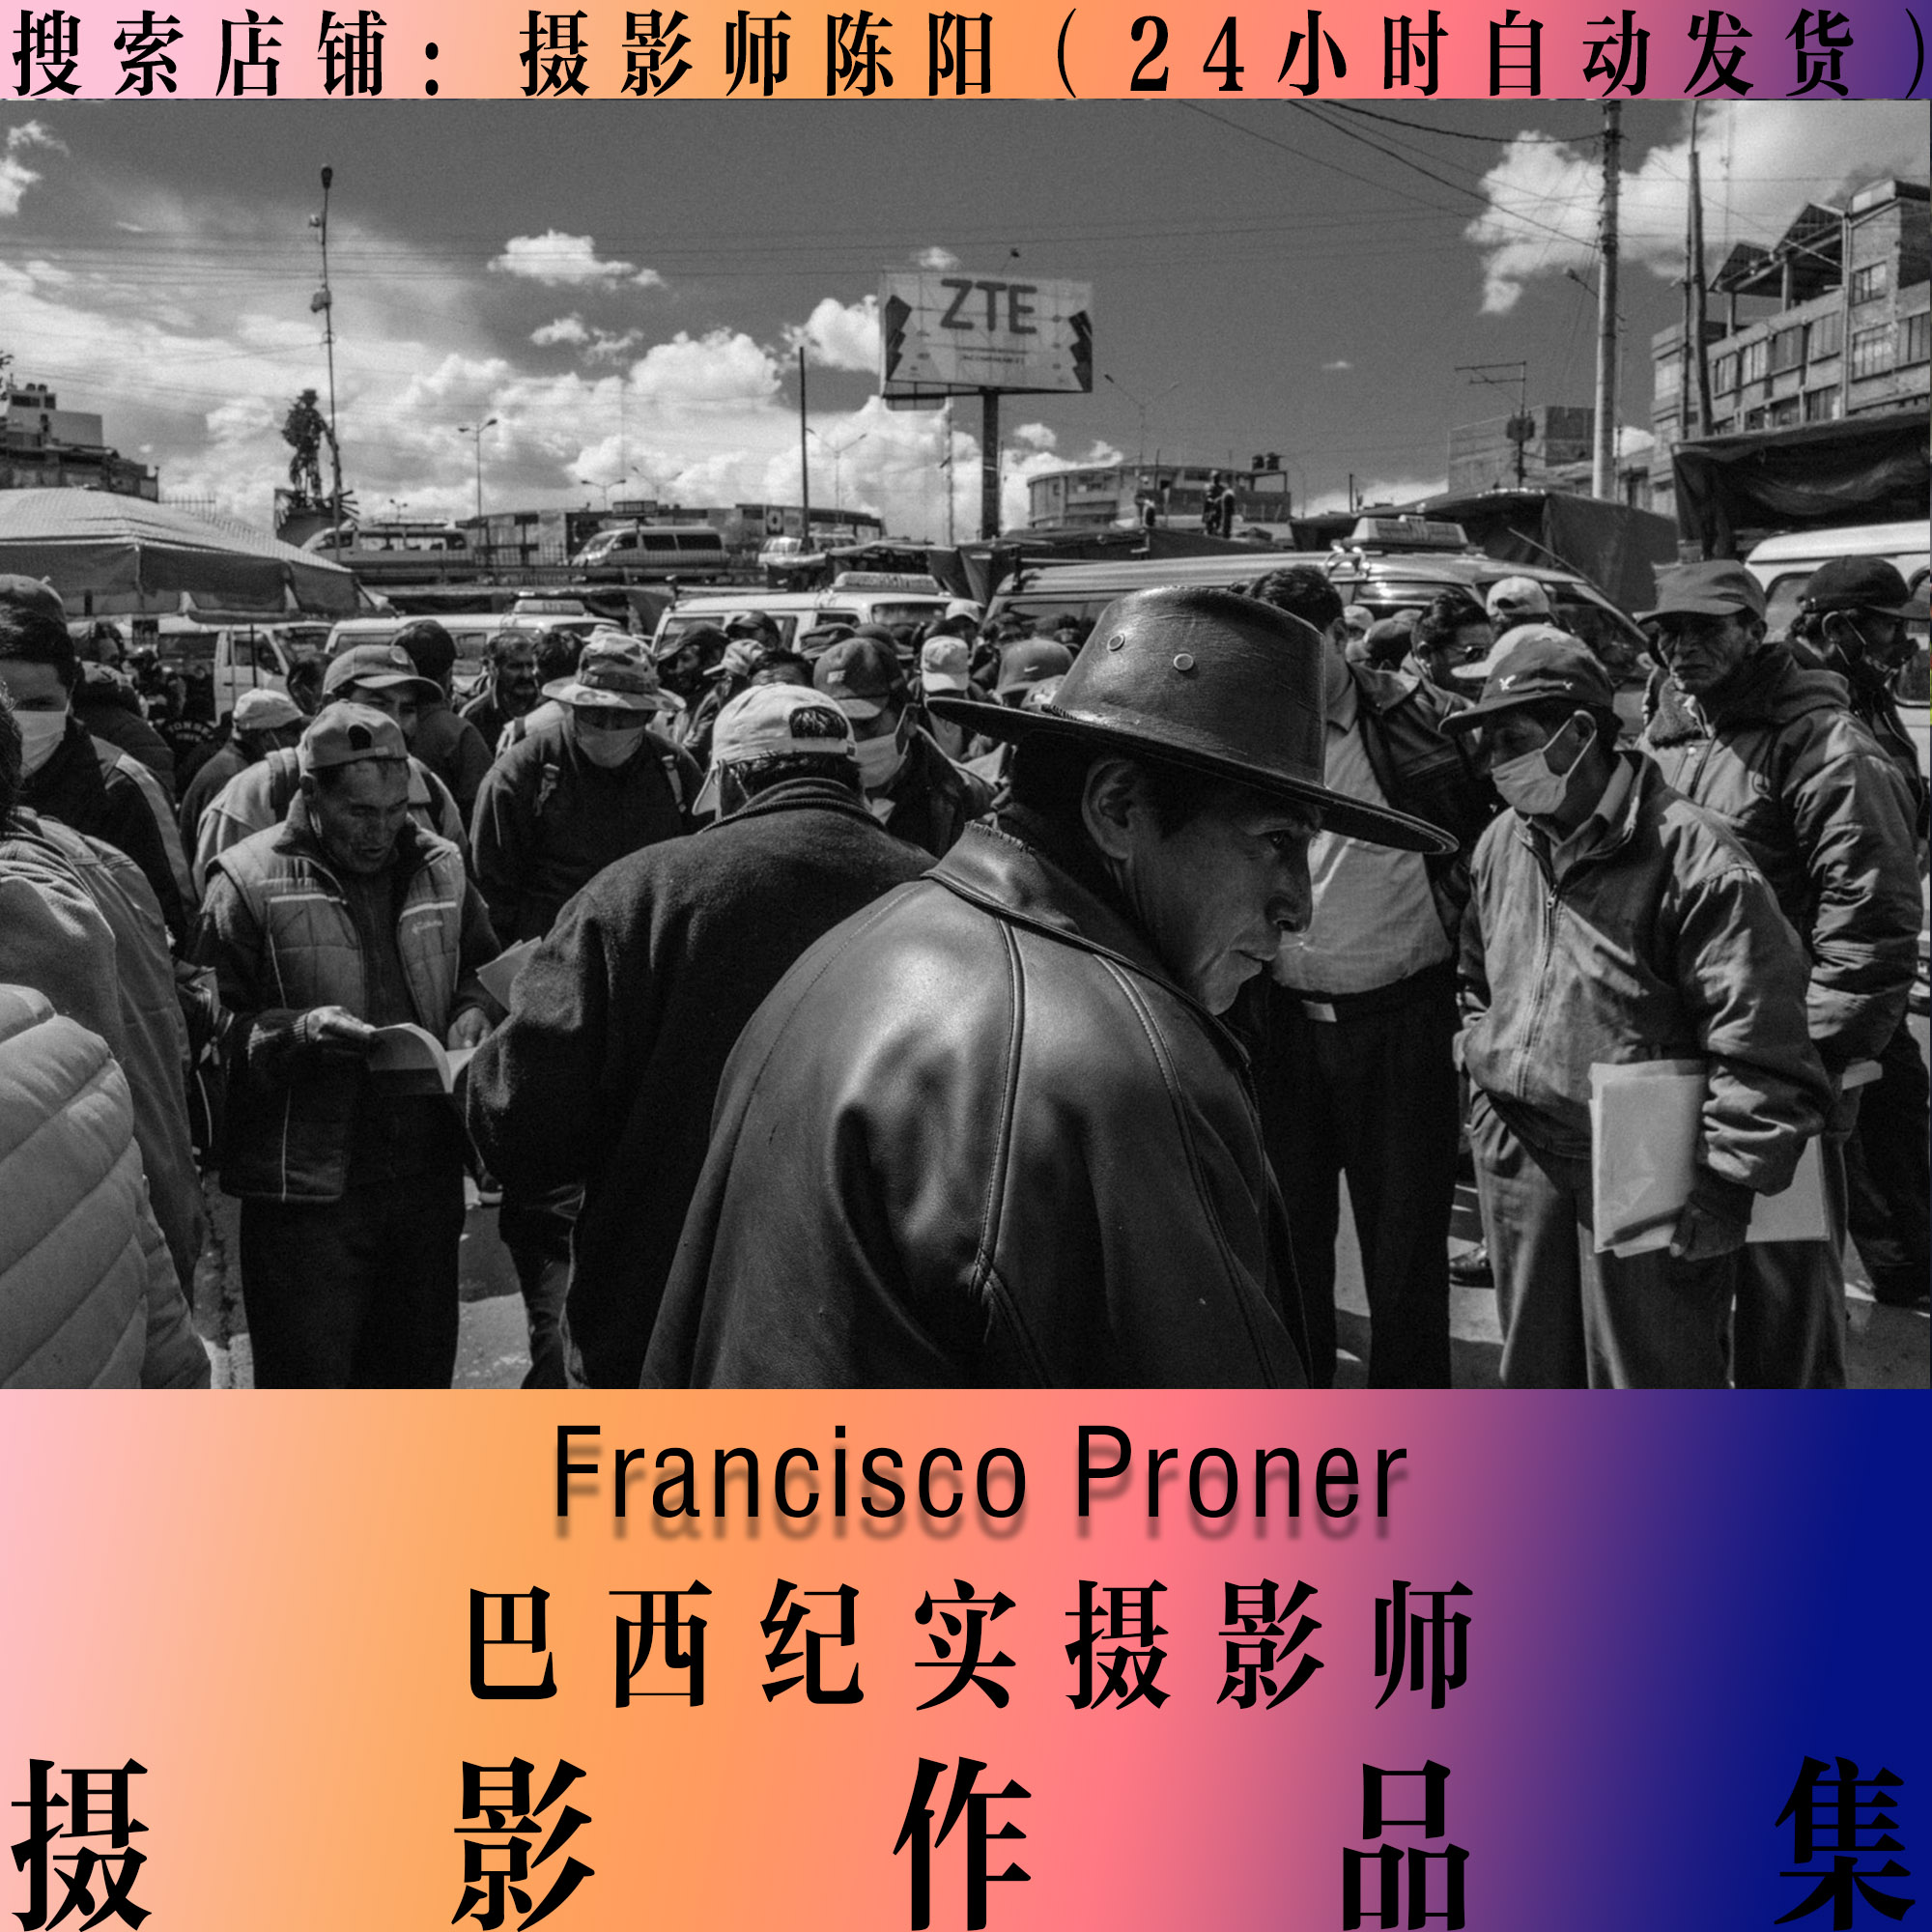 Francisco Proner 作品集 艺术审美 纪实摄影作品集 摄影师合集